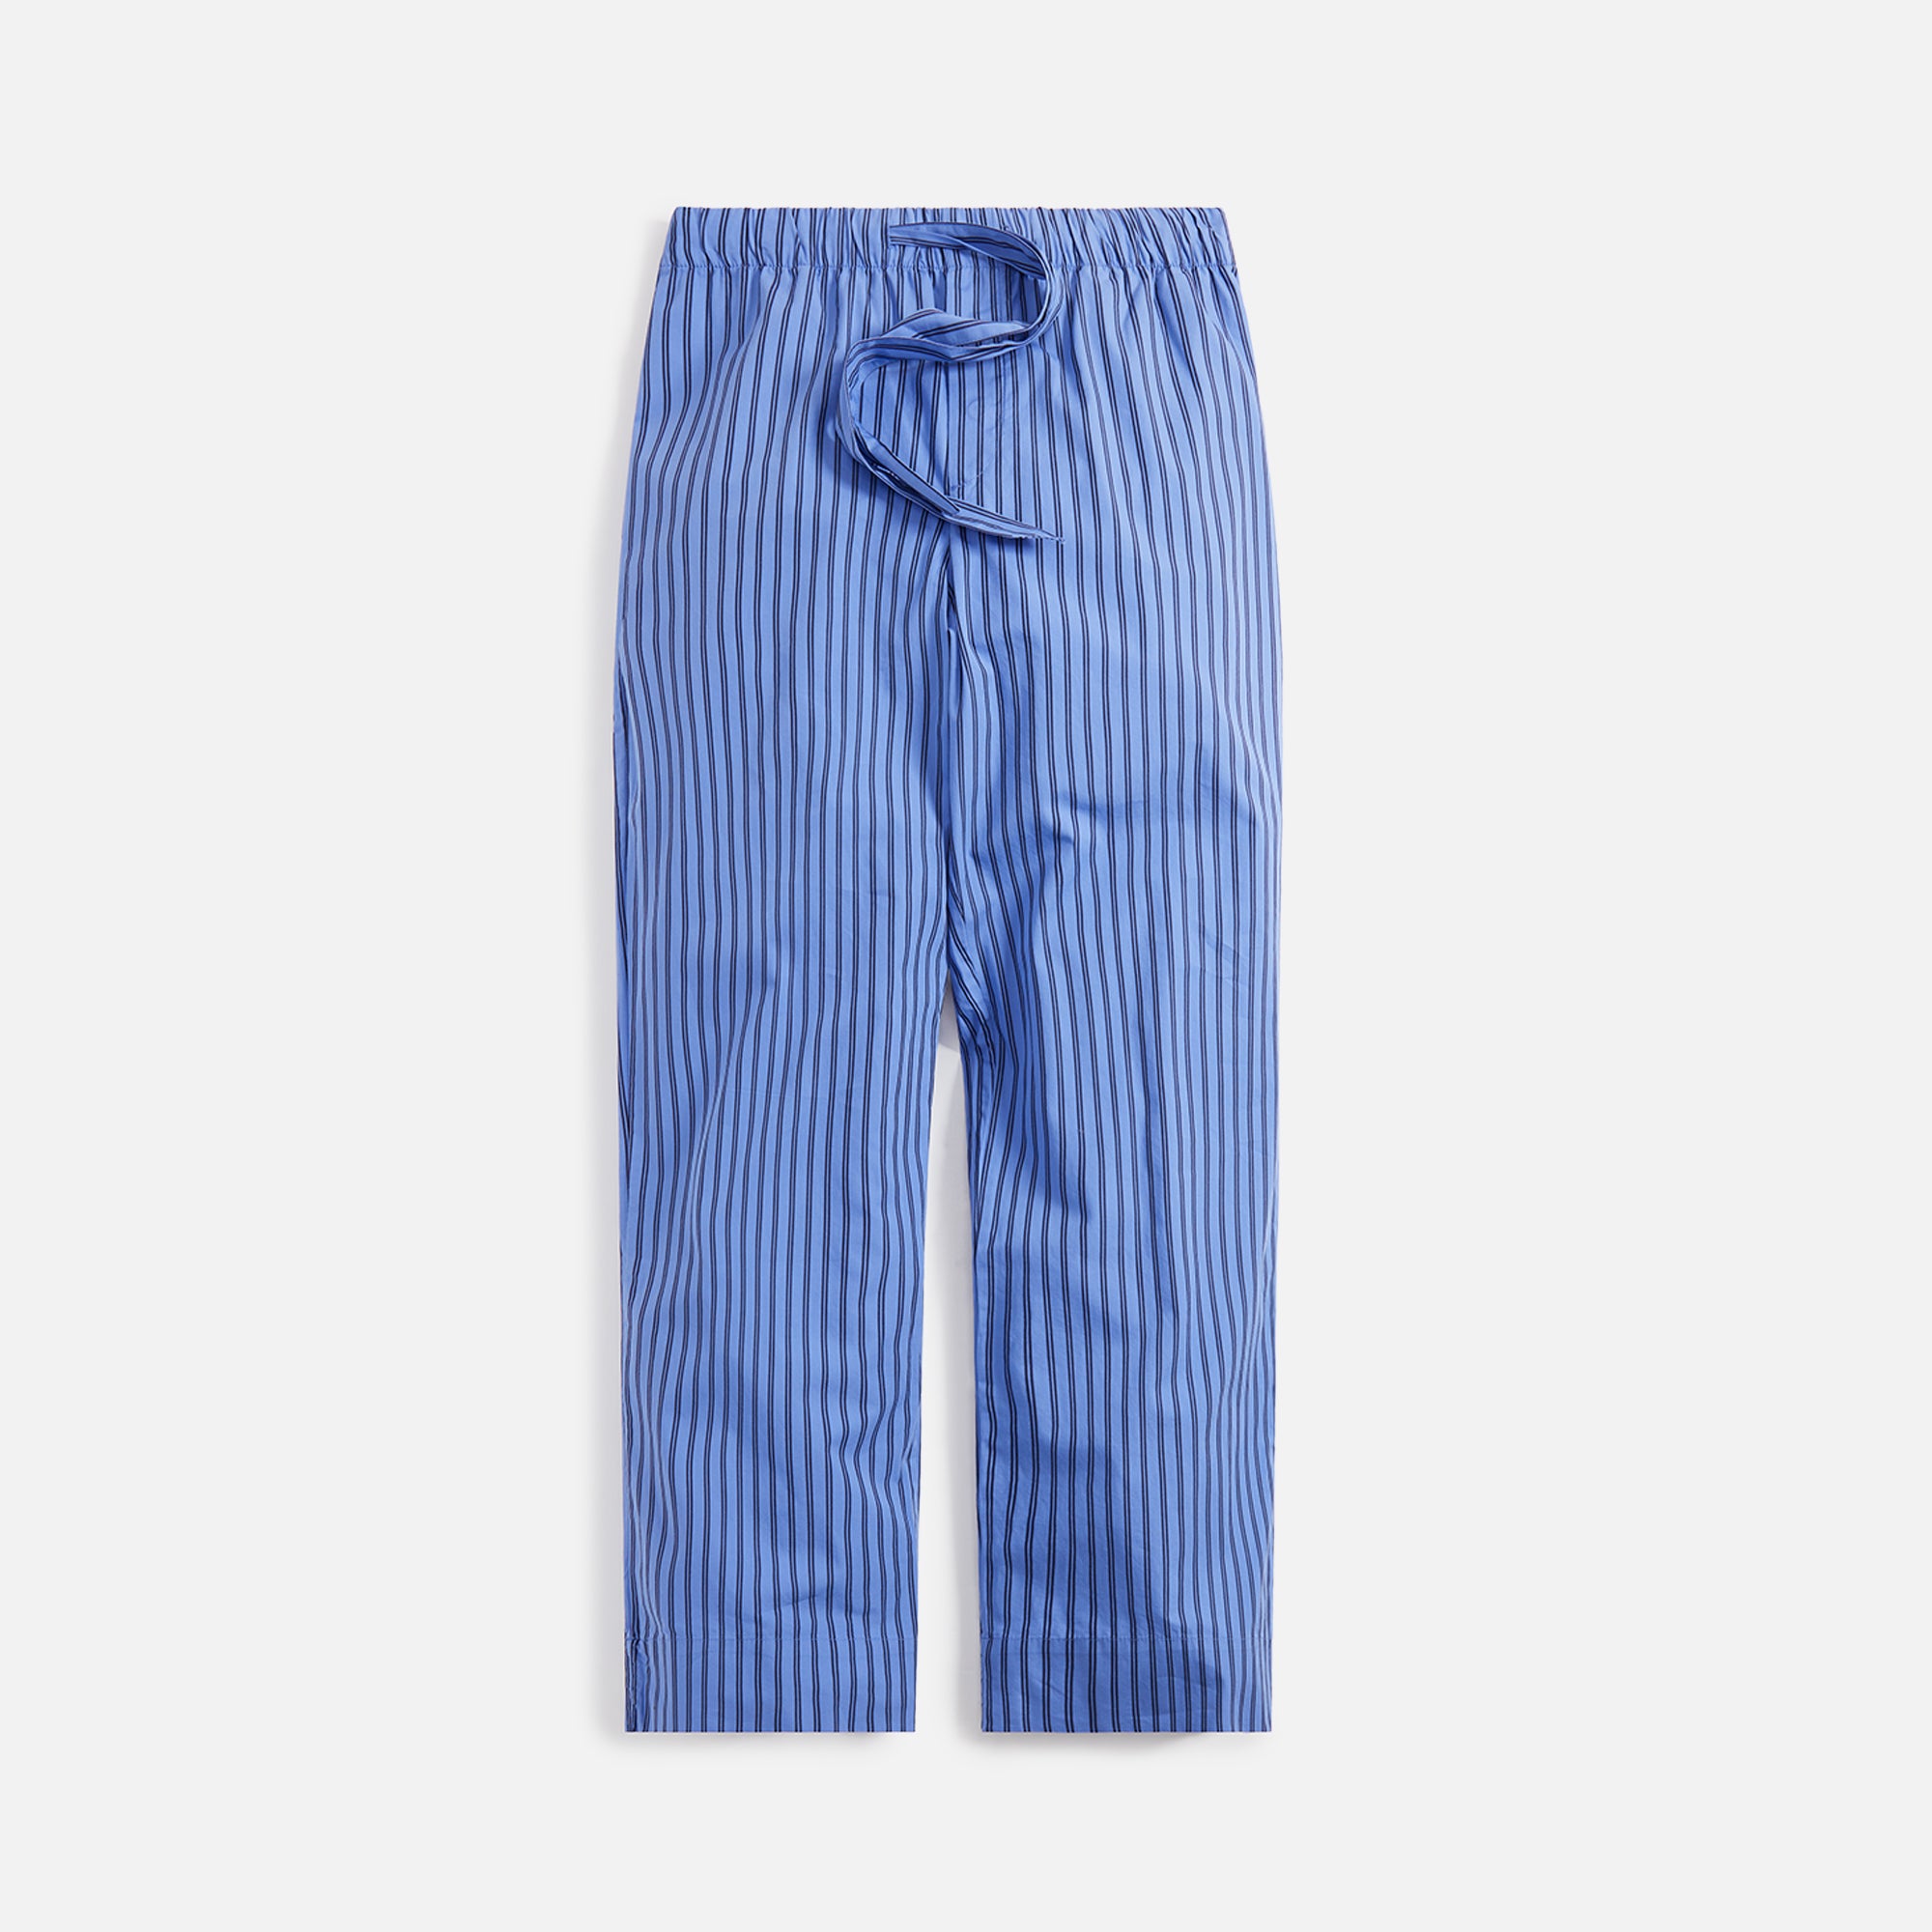  KLL Blue and White Stripes Lightweight Pajama Pants